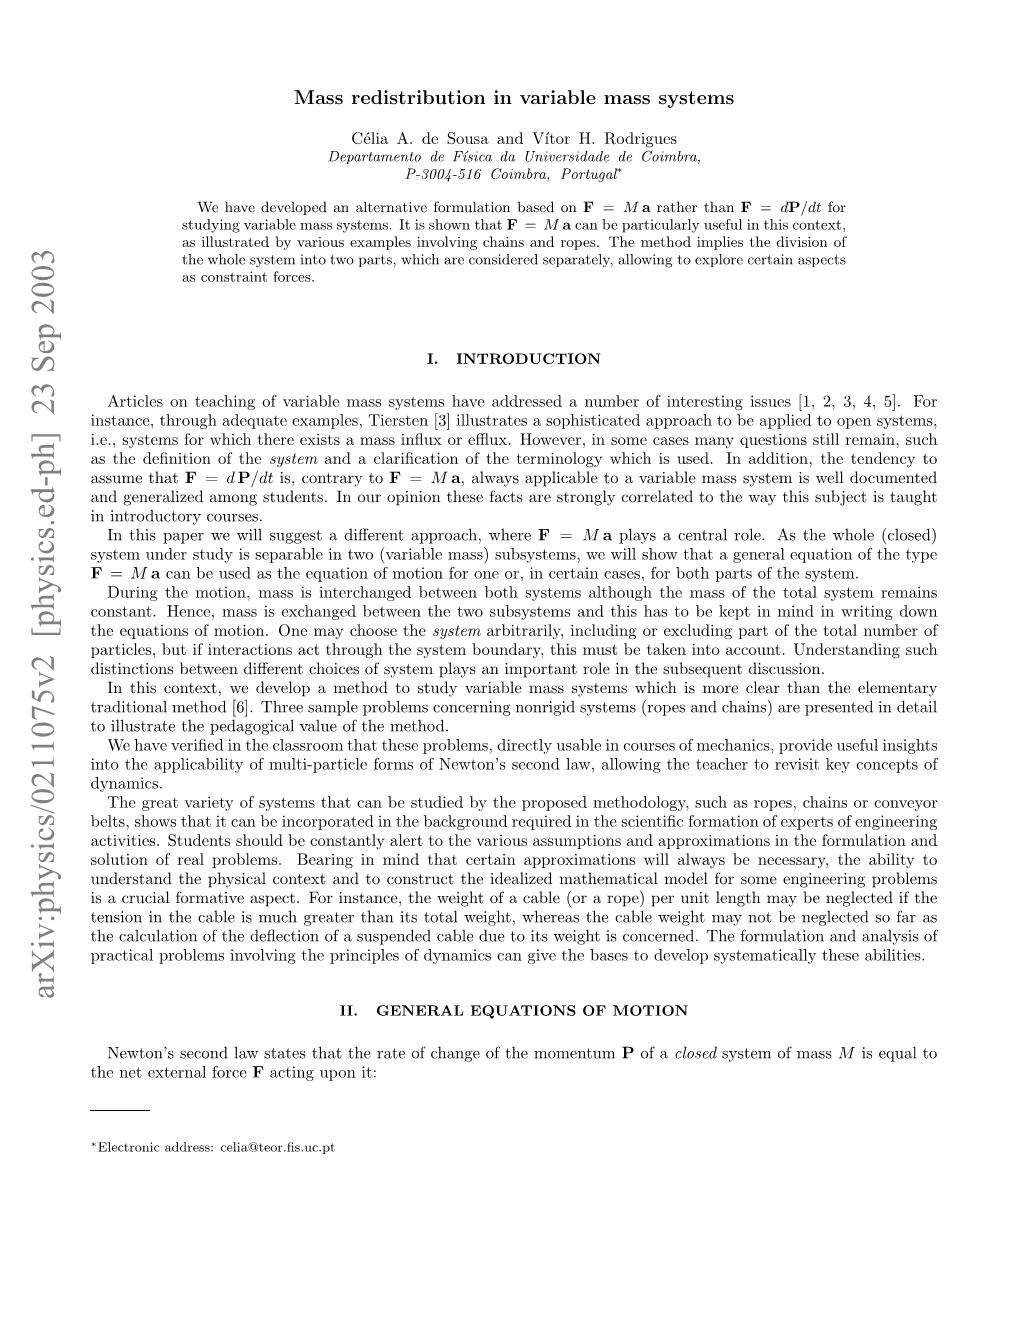 Arxiv:Physics/0211075V2 [Physics.Ed-Ph] 23 Sep 2003 H E Xenlforce External Net the